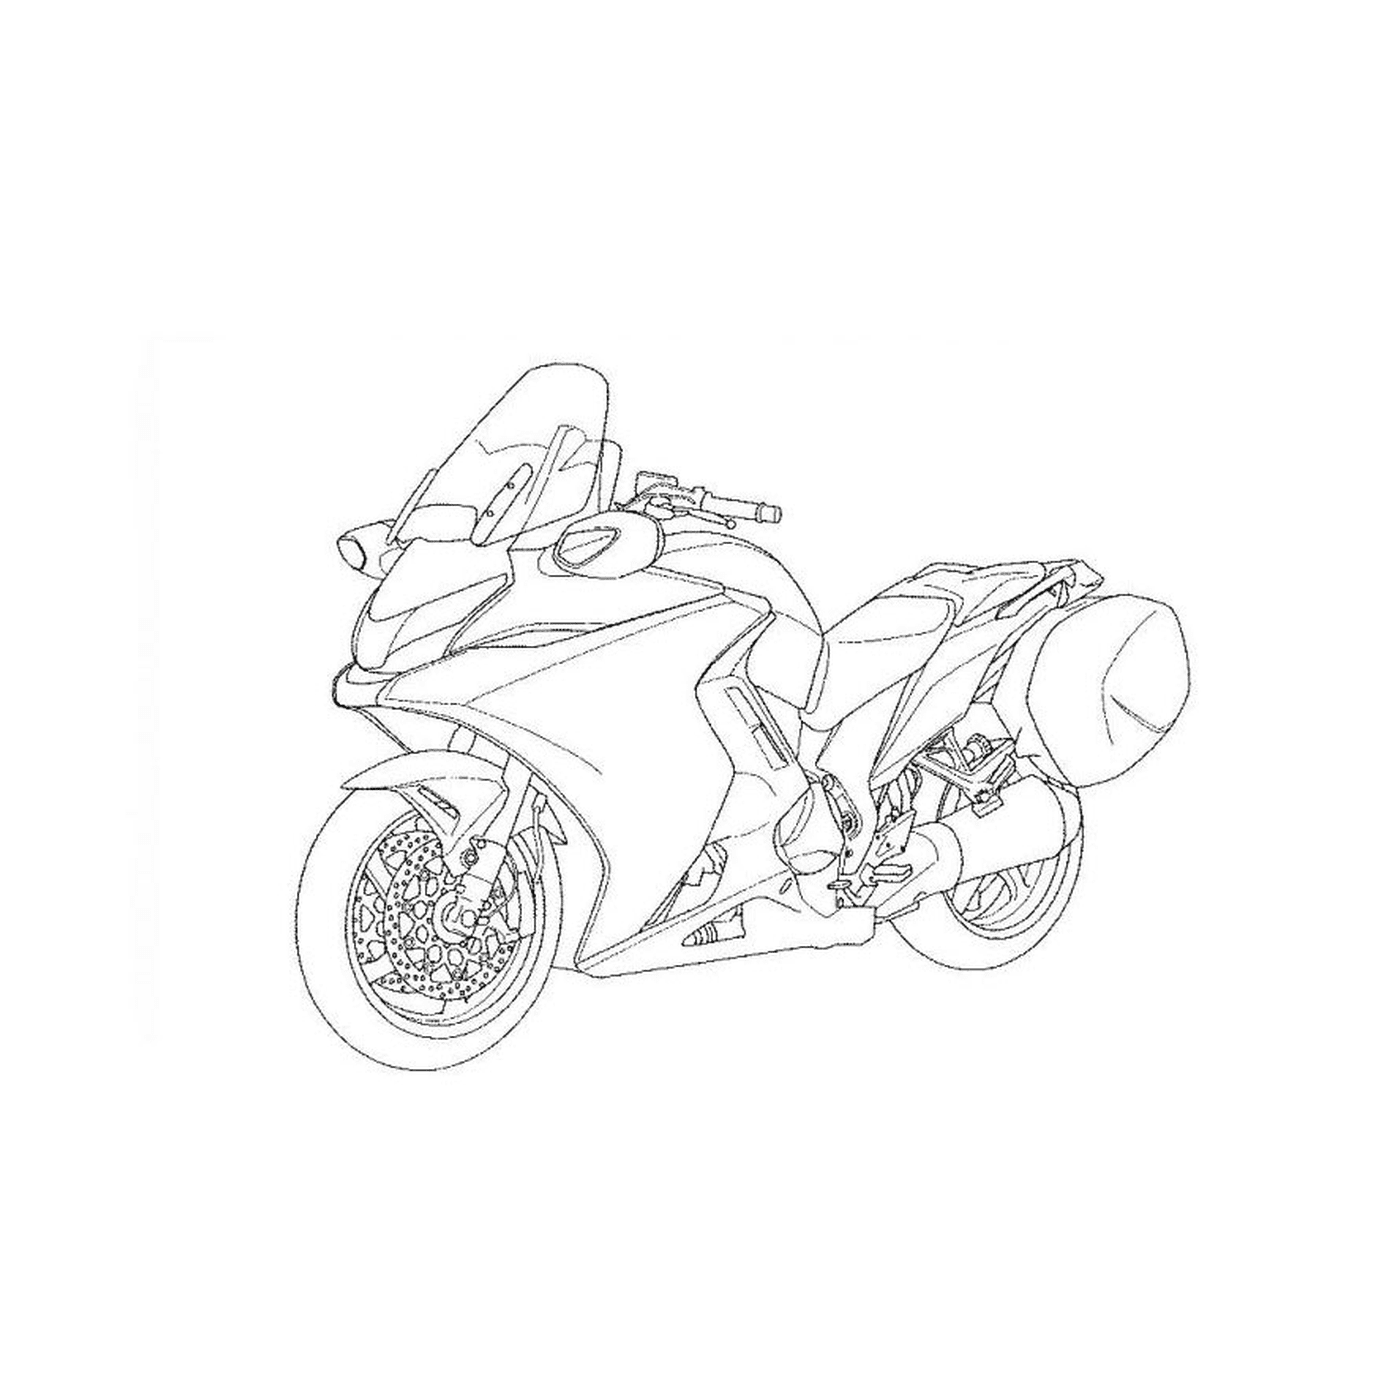  motocicleta personalizada no fundo branco 